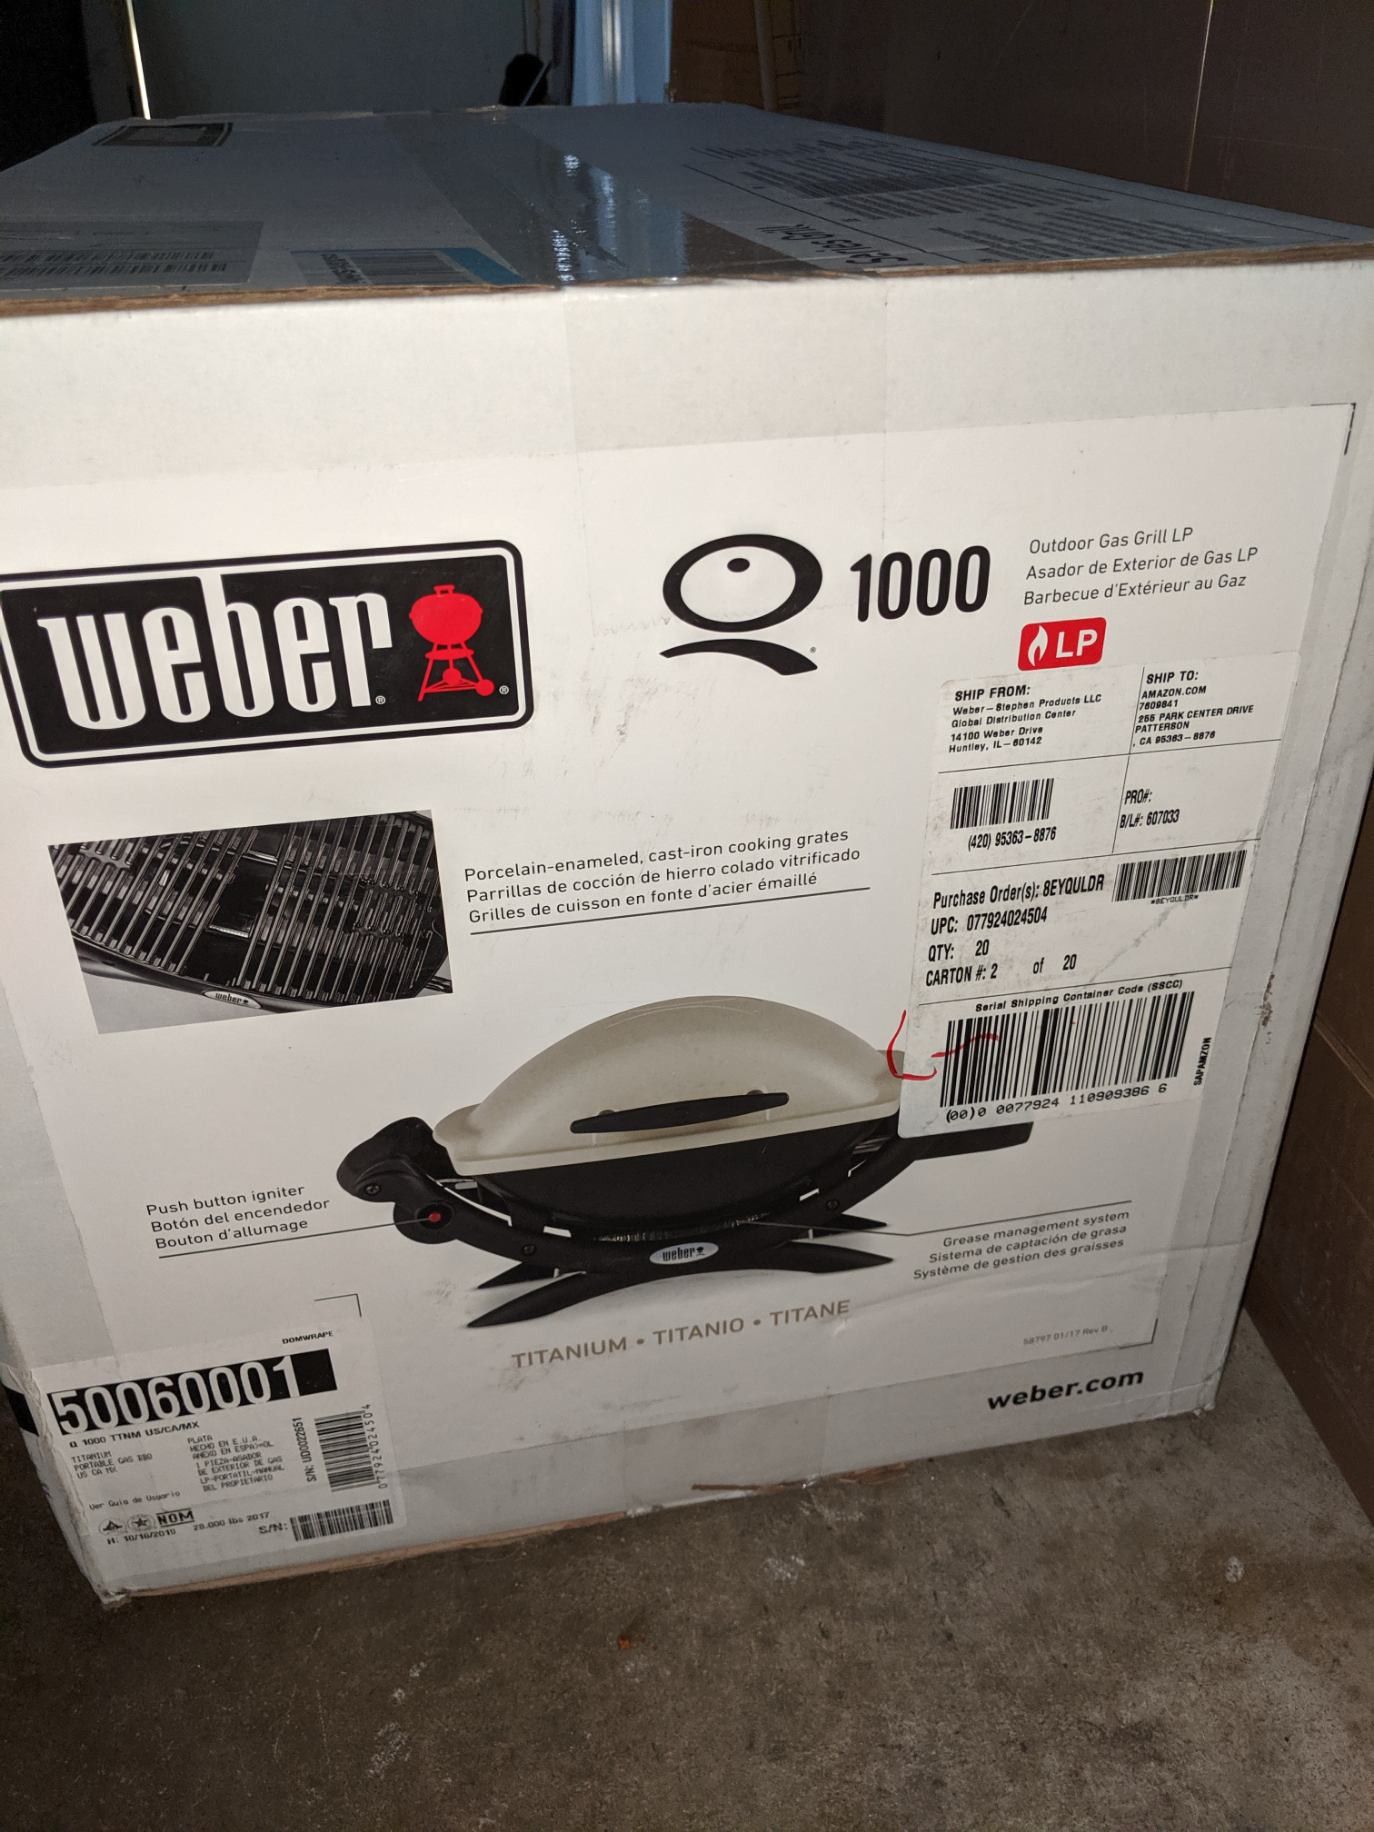 New Weber BBQ Q1000 grill burner propane in titanium